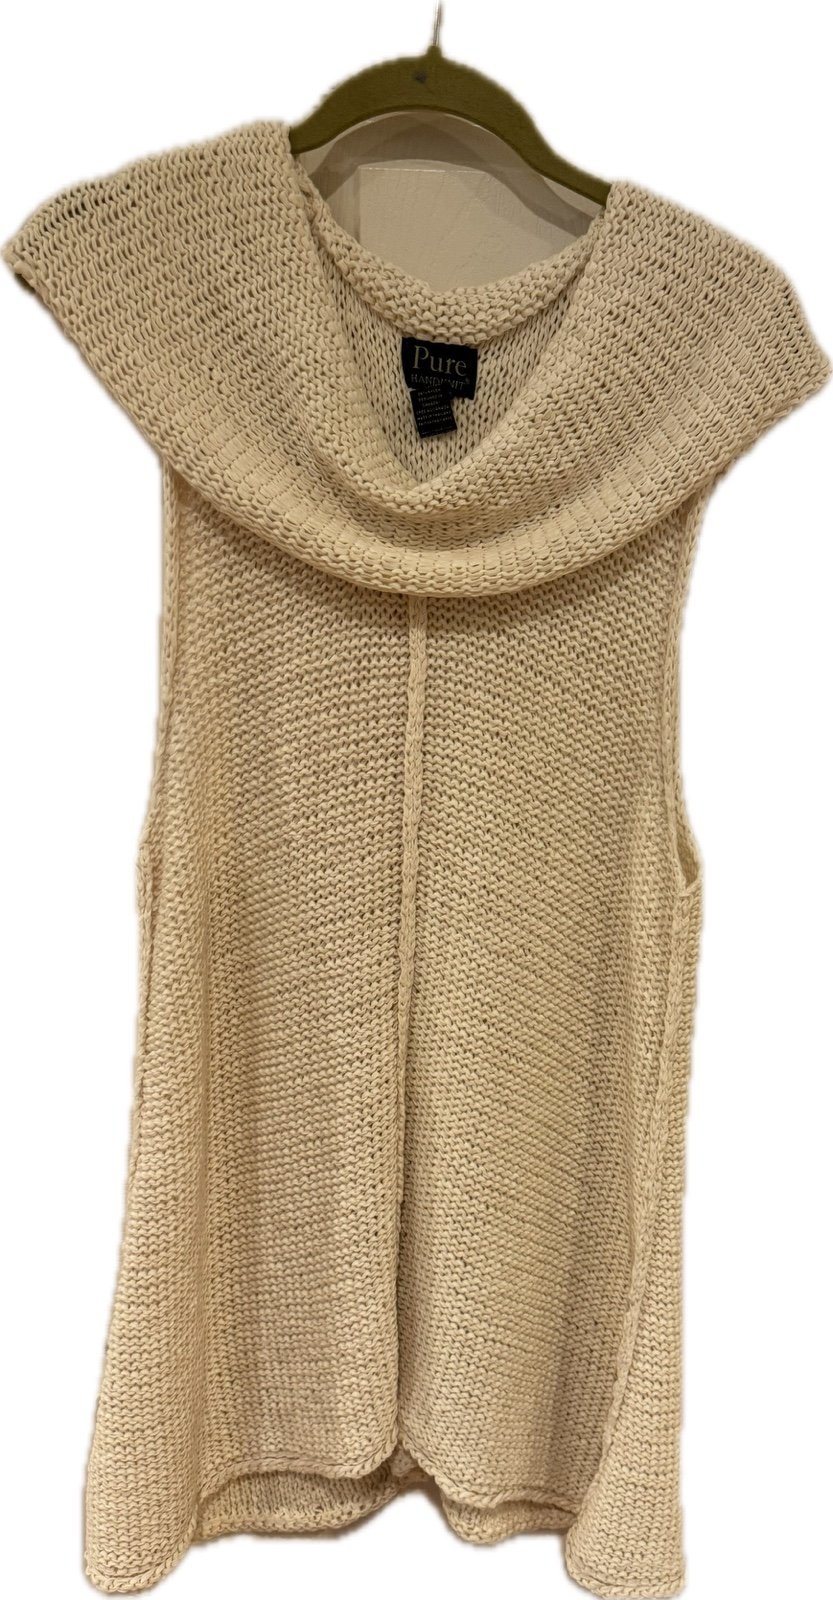 where to buy  Women’s size medium/large PURE Handknit cream cowl neck sweater FJA6c3uP8 hot sale